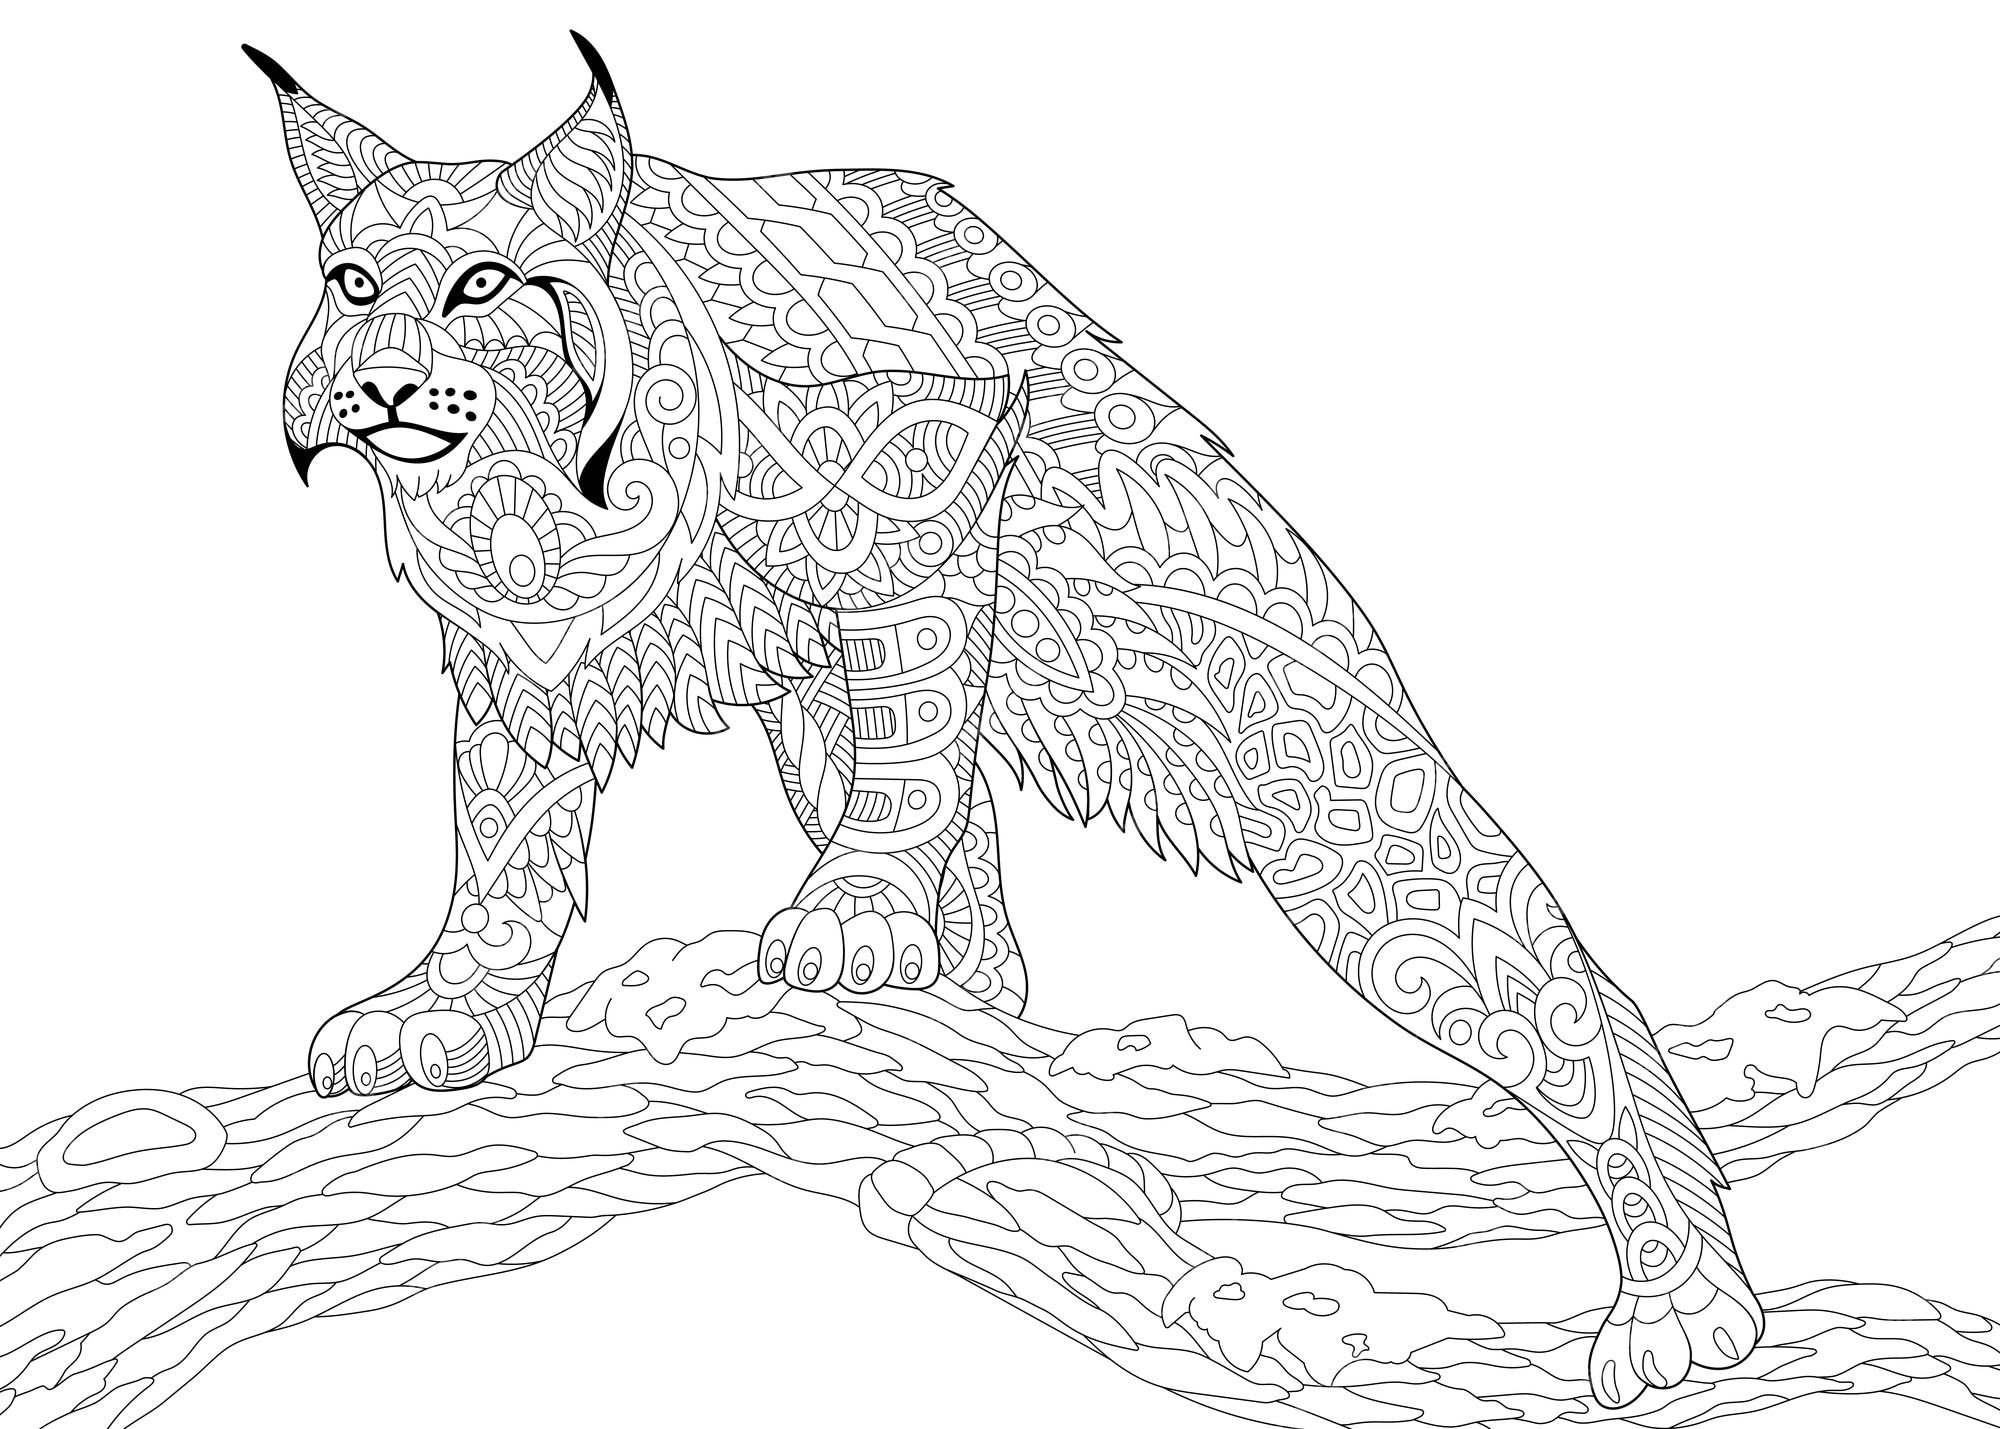 Lynx. zentangle colouring illustration ...